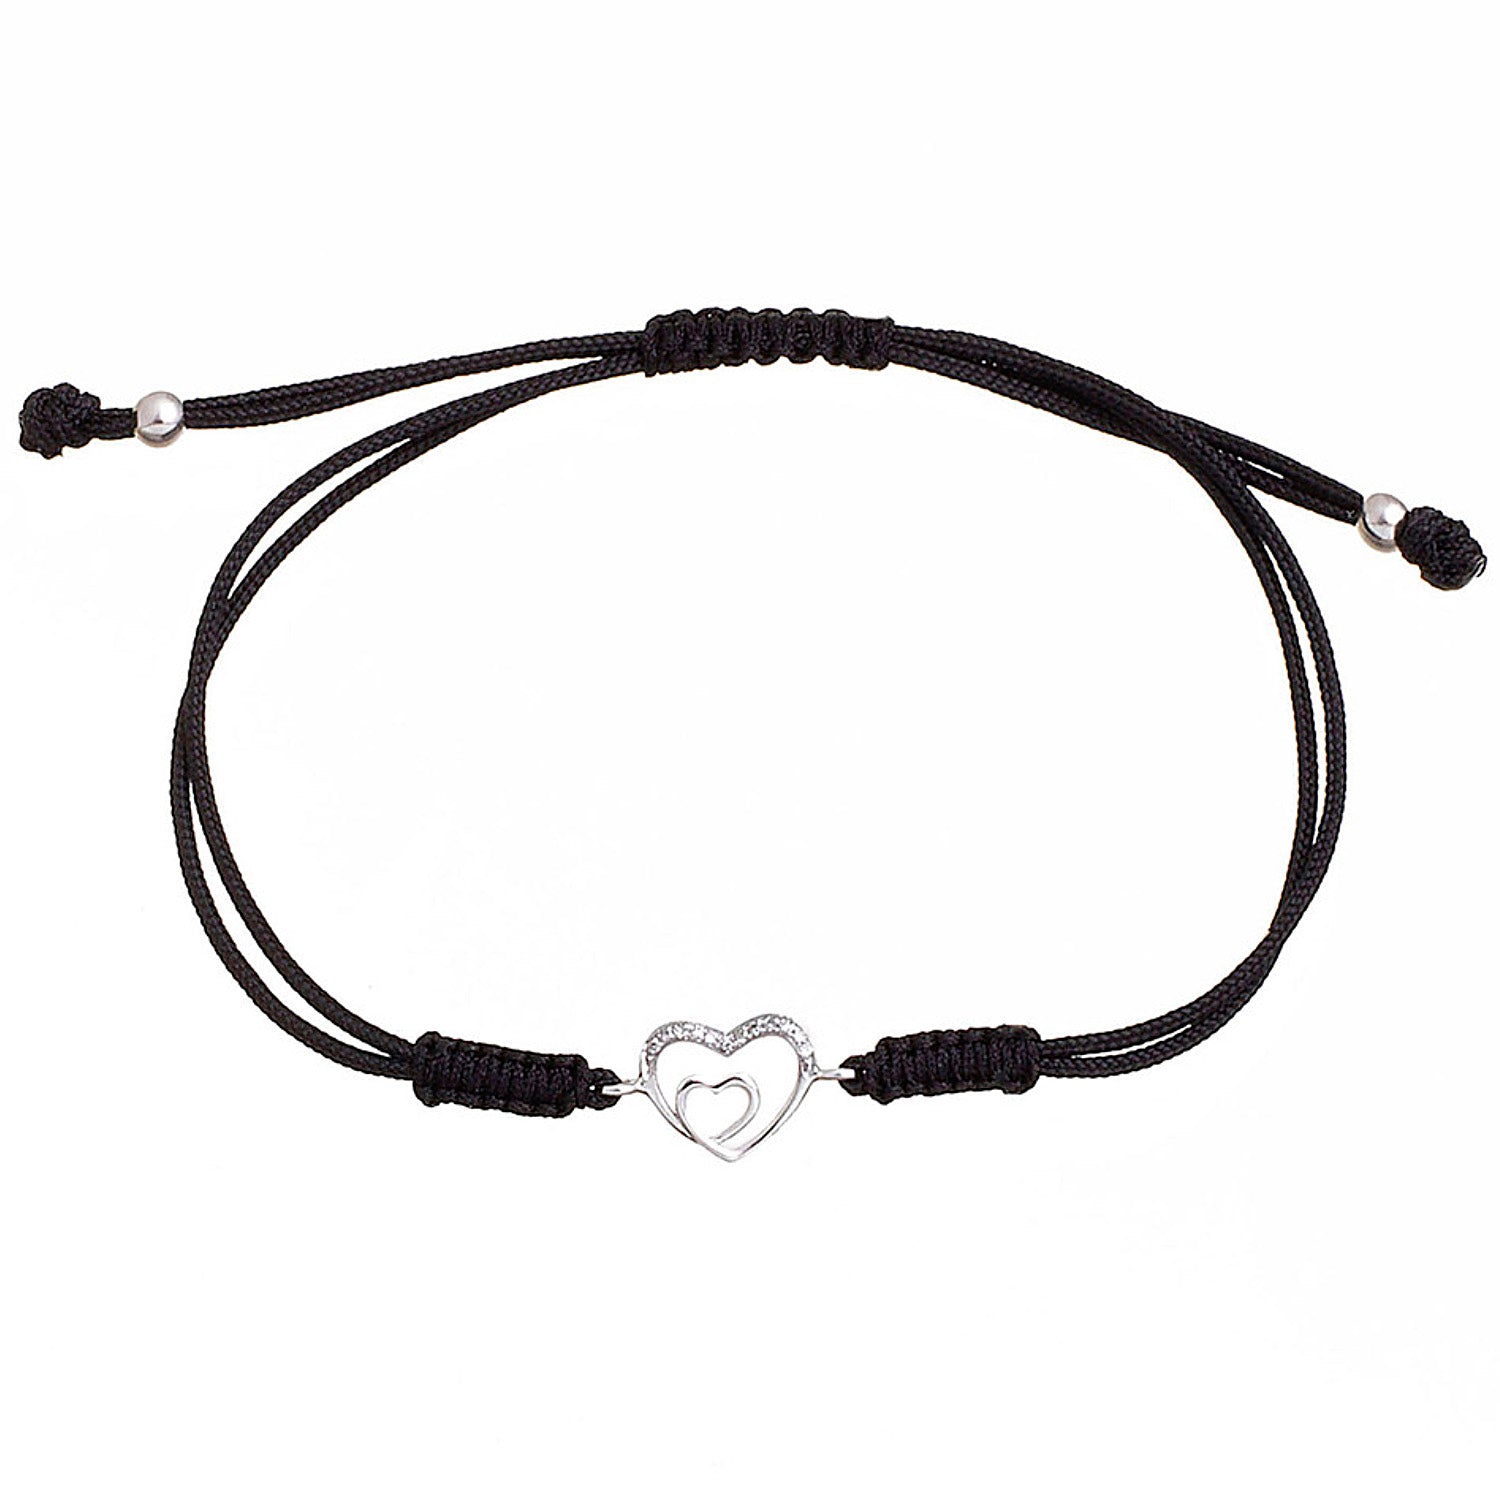 Diamond Heart Bracelet. Cord bracelet